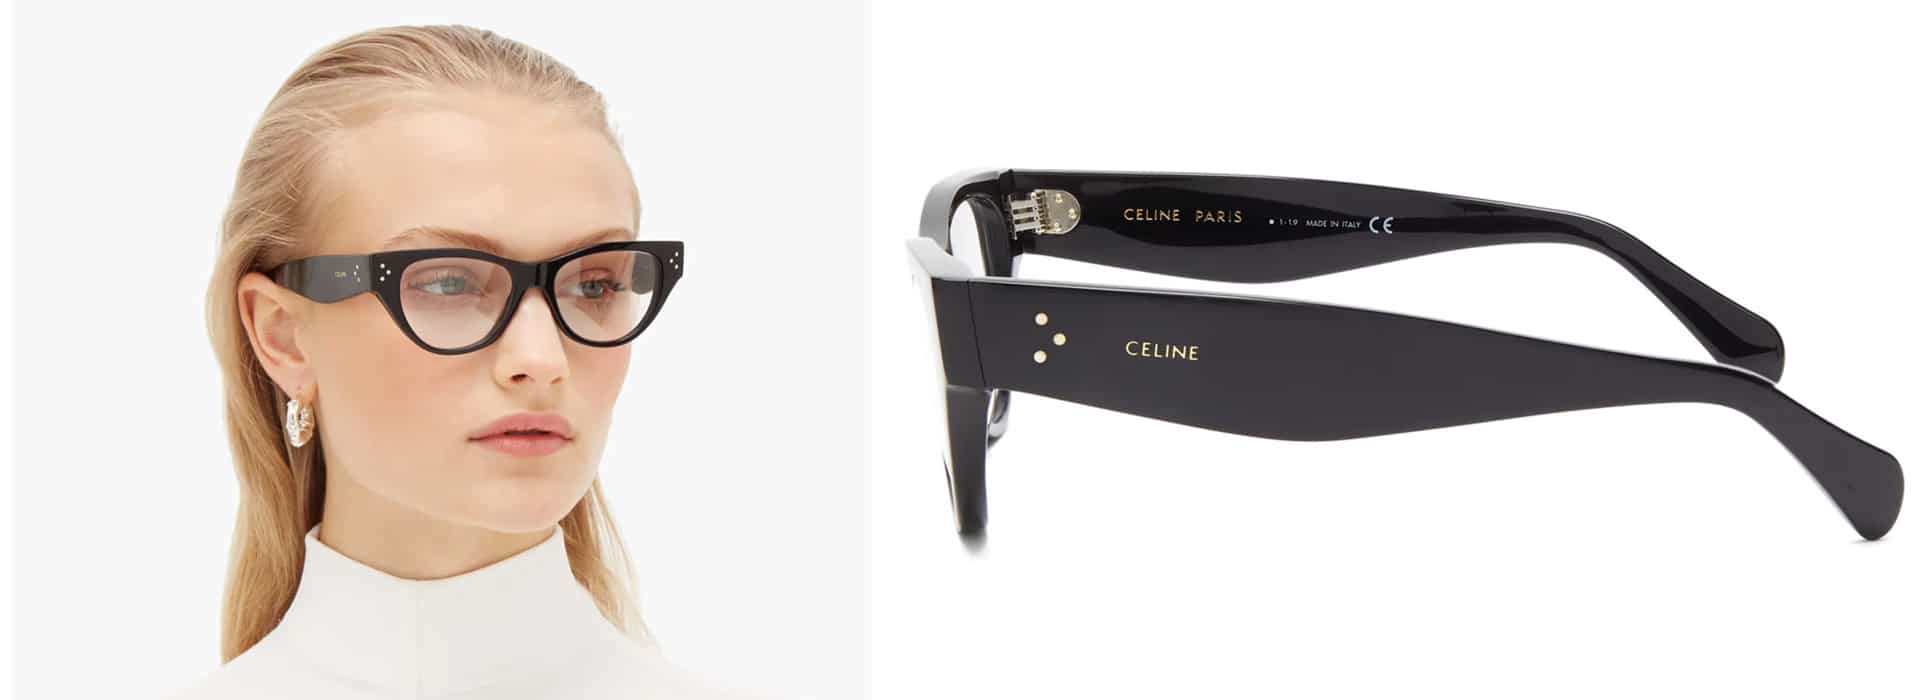 Celine Eyewear Toronto Model Hero